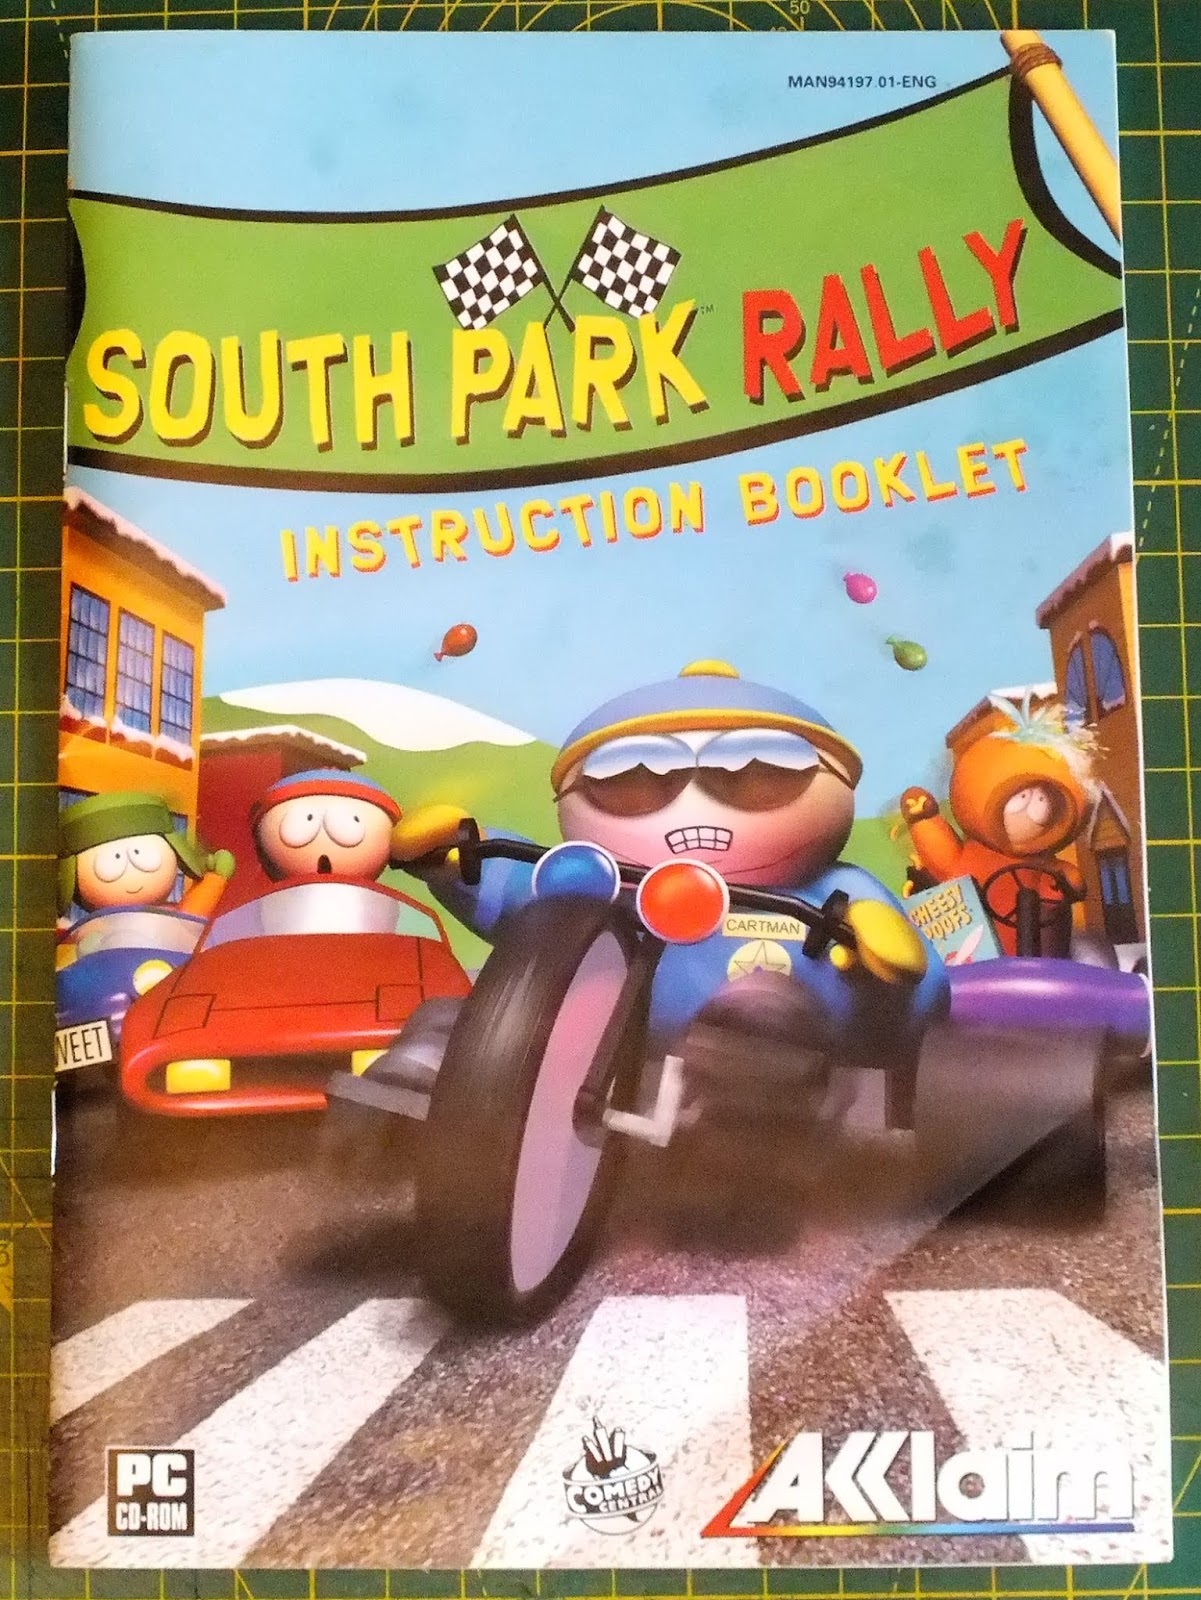 Retro Computing Grotto: South Park Rally - Big Box - Retro Gaming